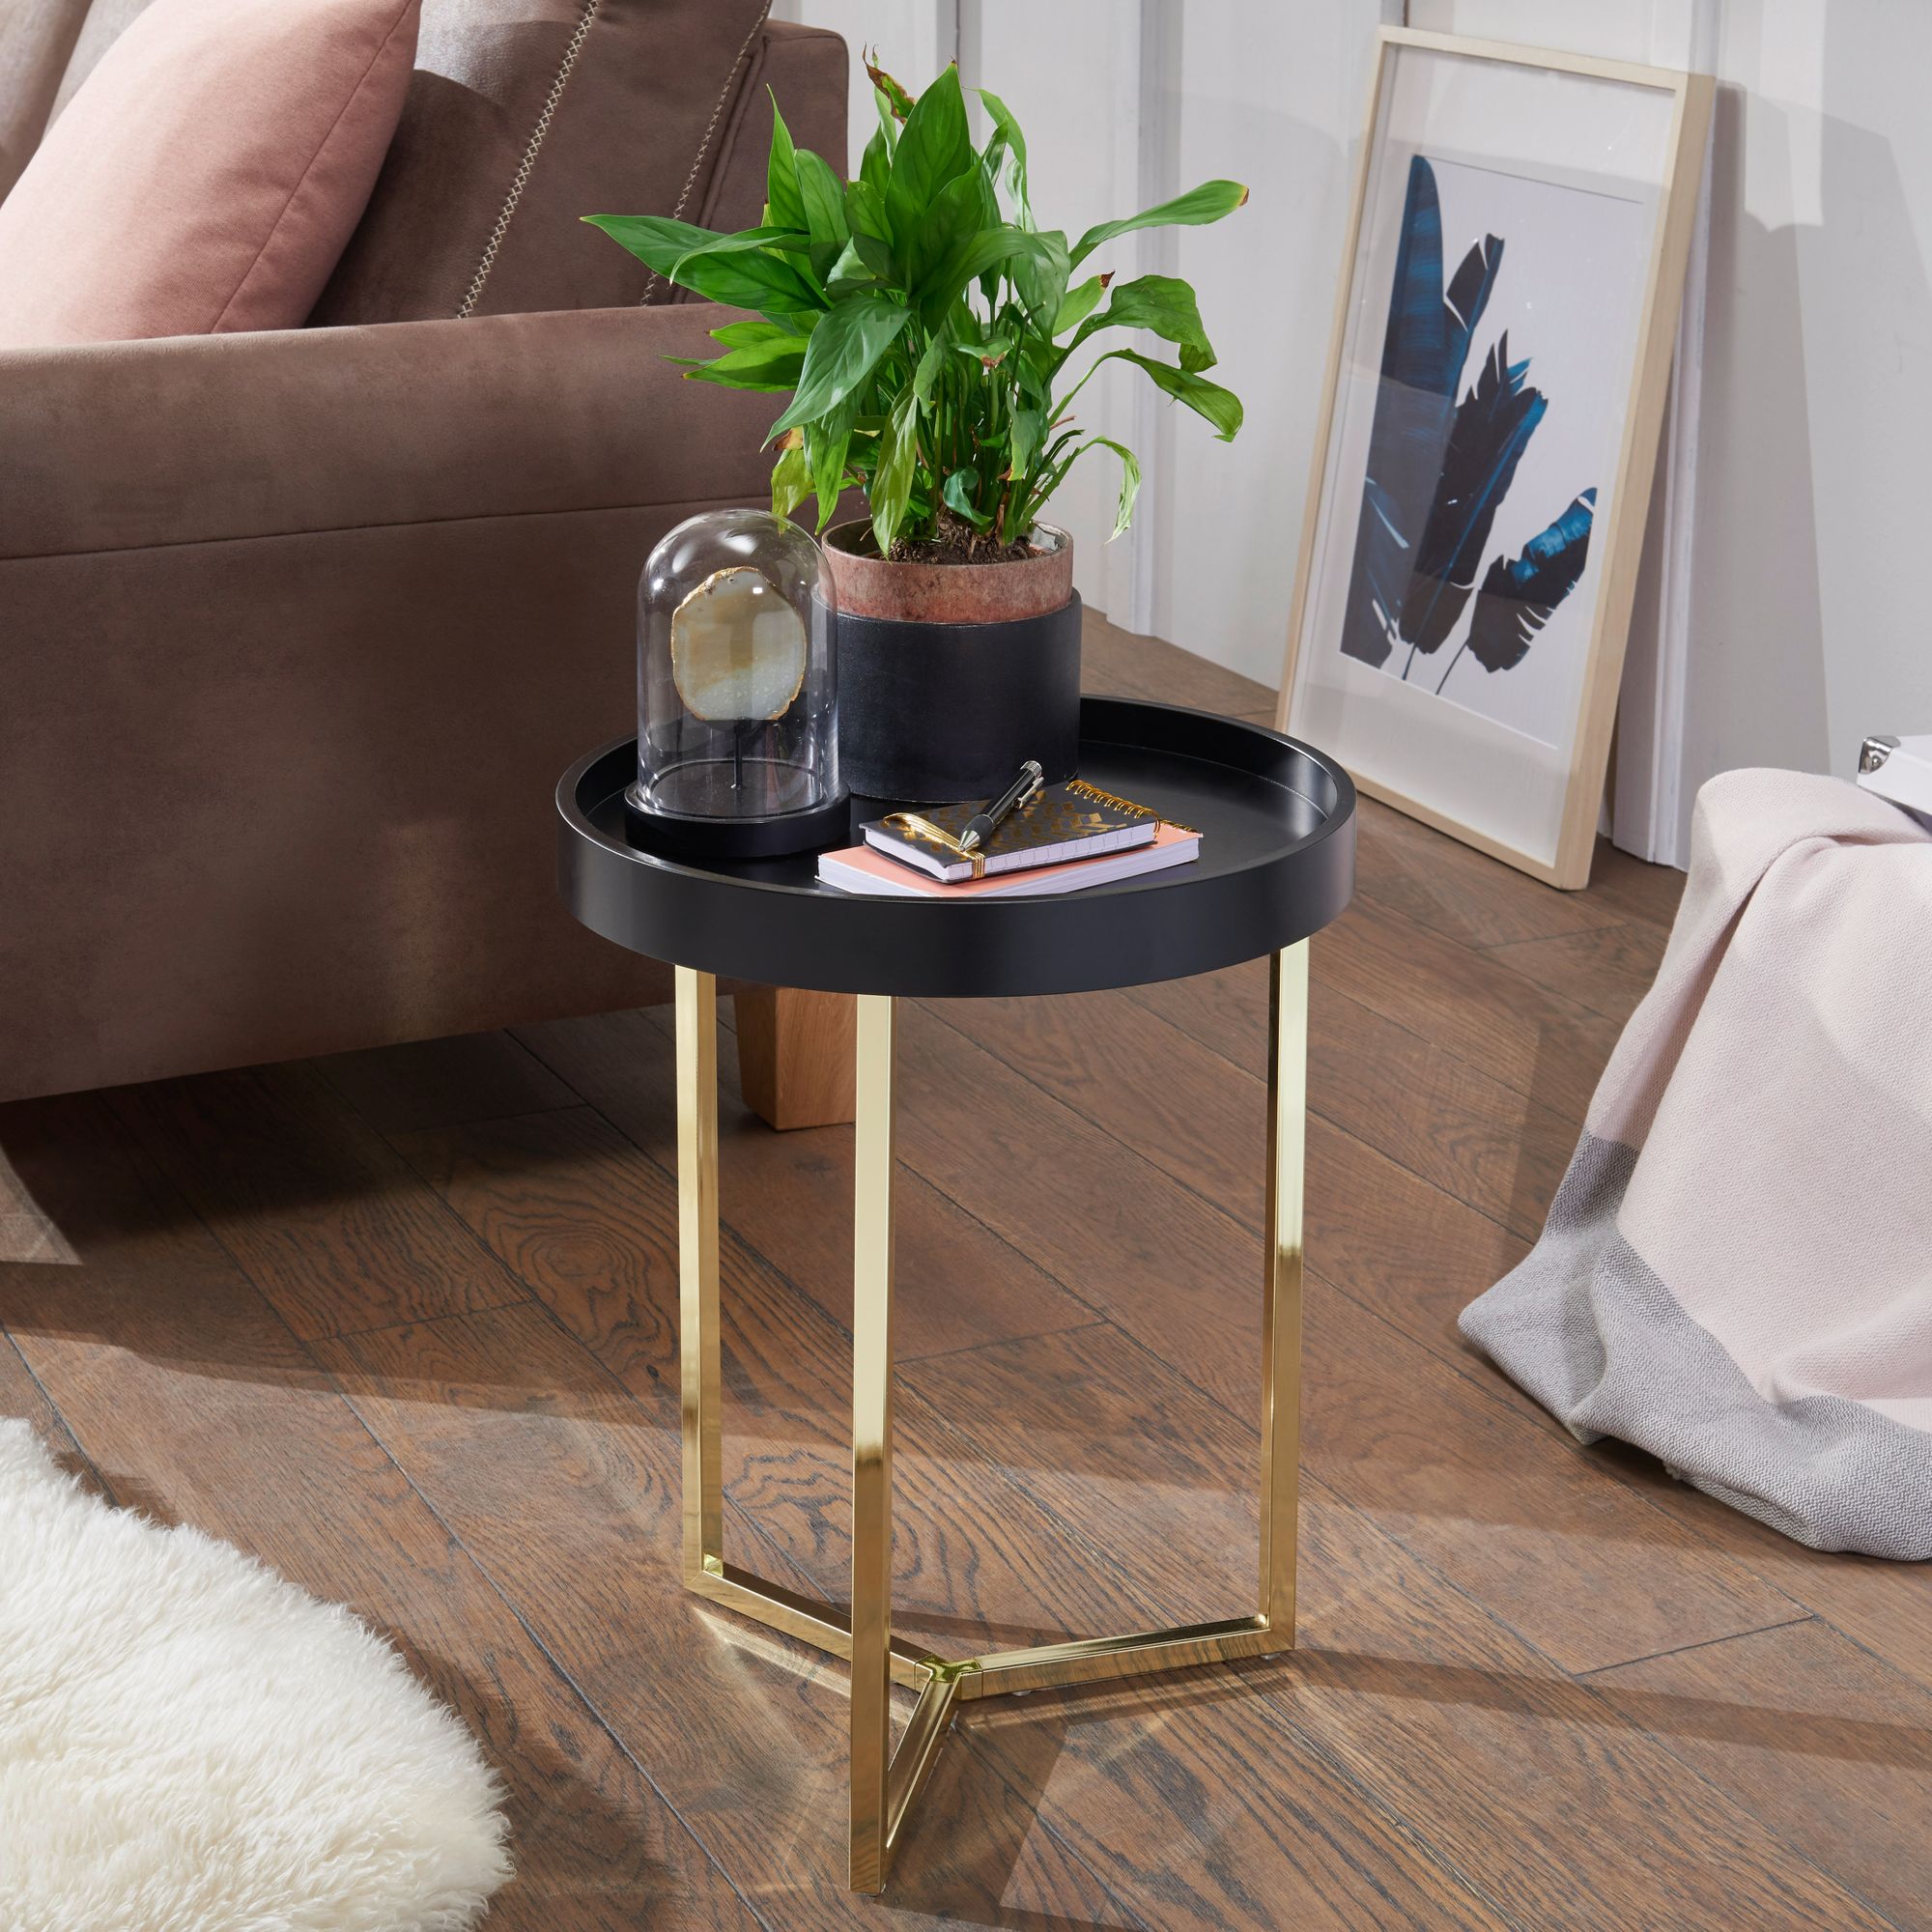 Nancy's Asheboro Side table - Coffee table - Side table - Wood - Metal - Ø 40 cm - Black - Gold